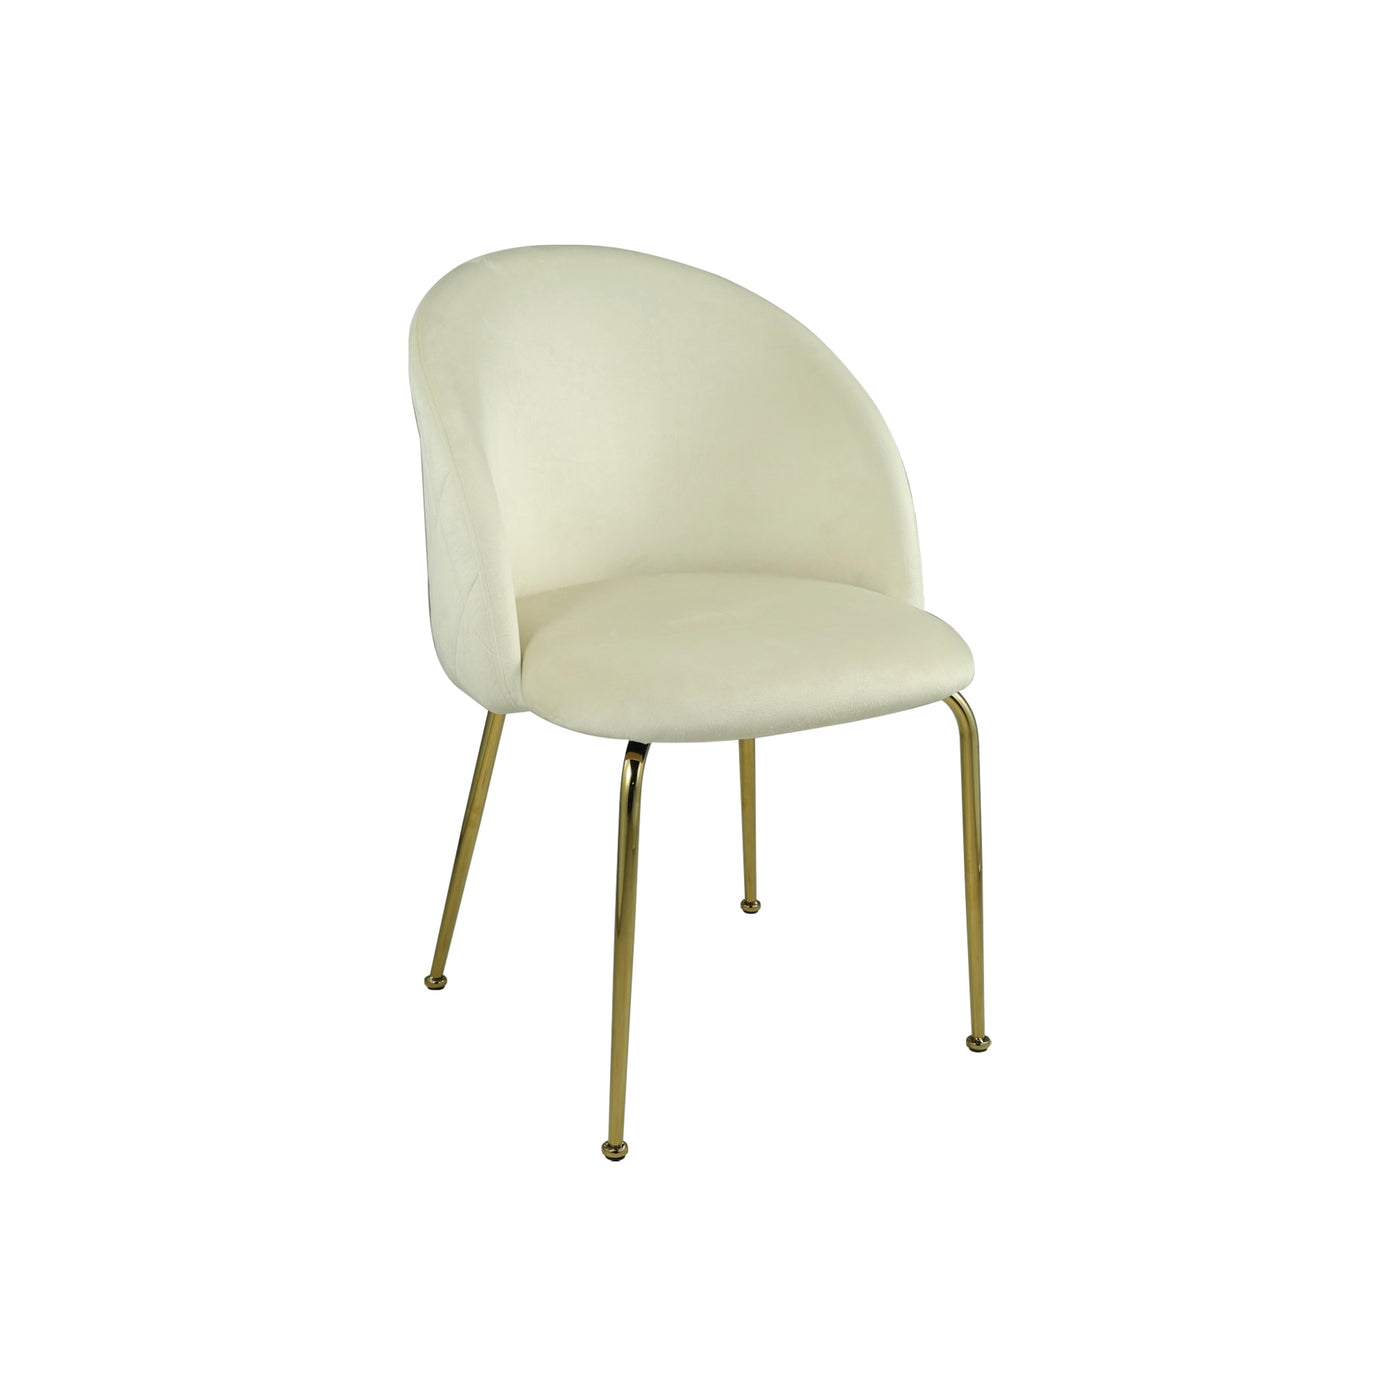 Agatha Beige velvet chair with gold legs